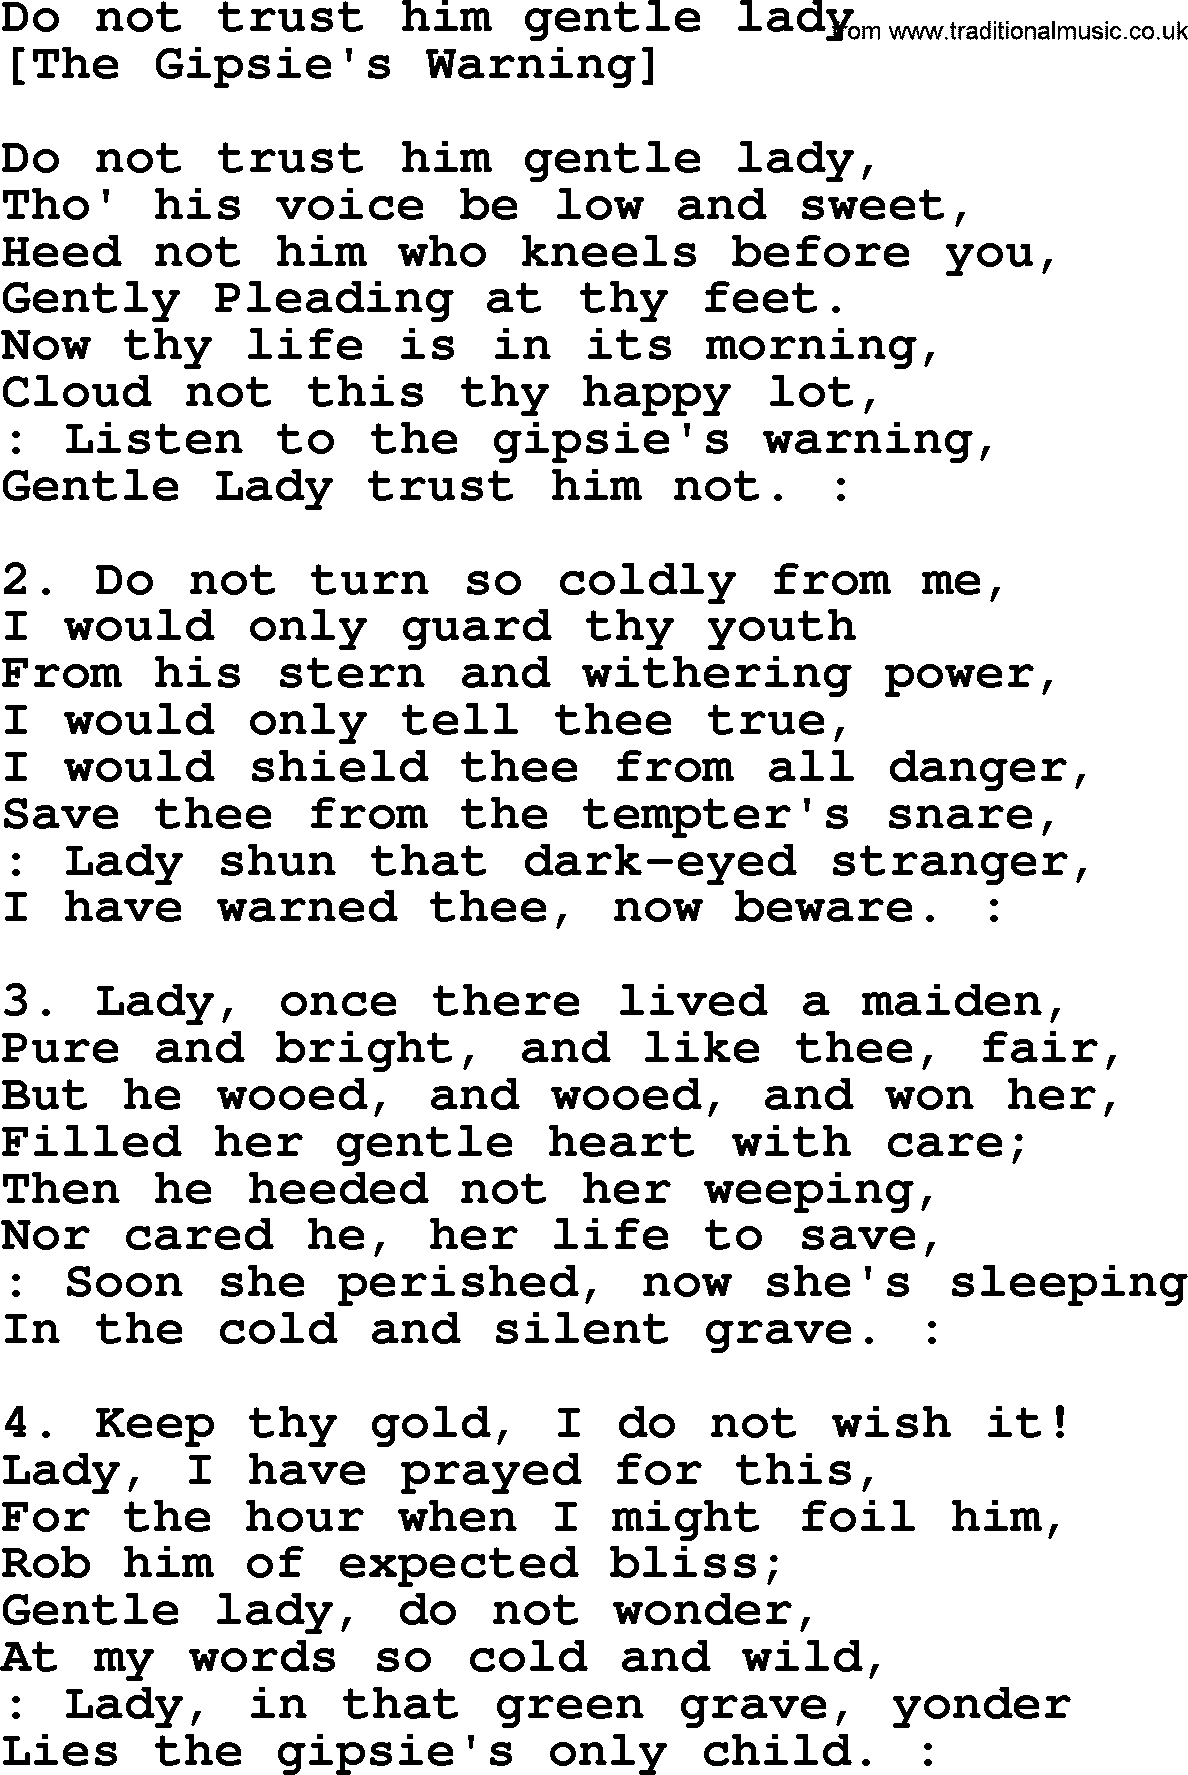 Old American Song: Do Not Trust Him Gentle Lady, lyrics